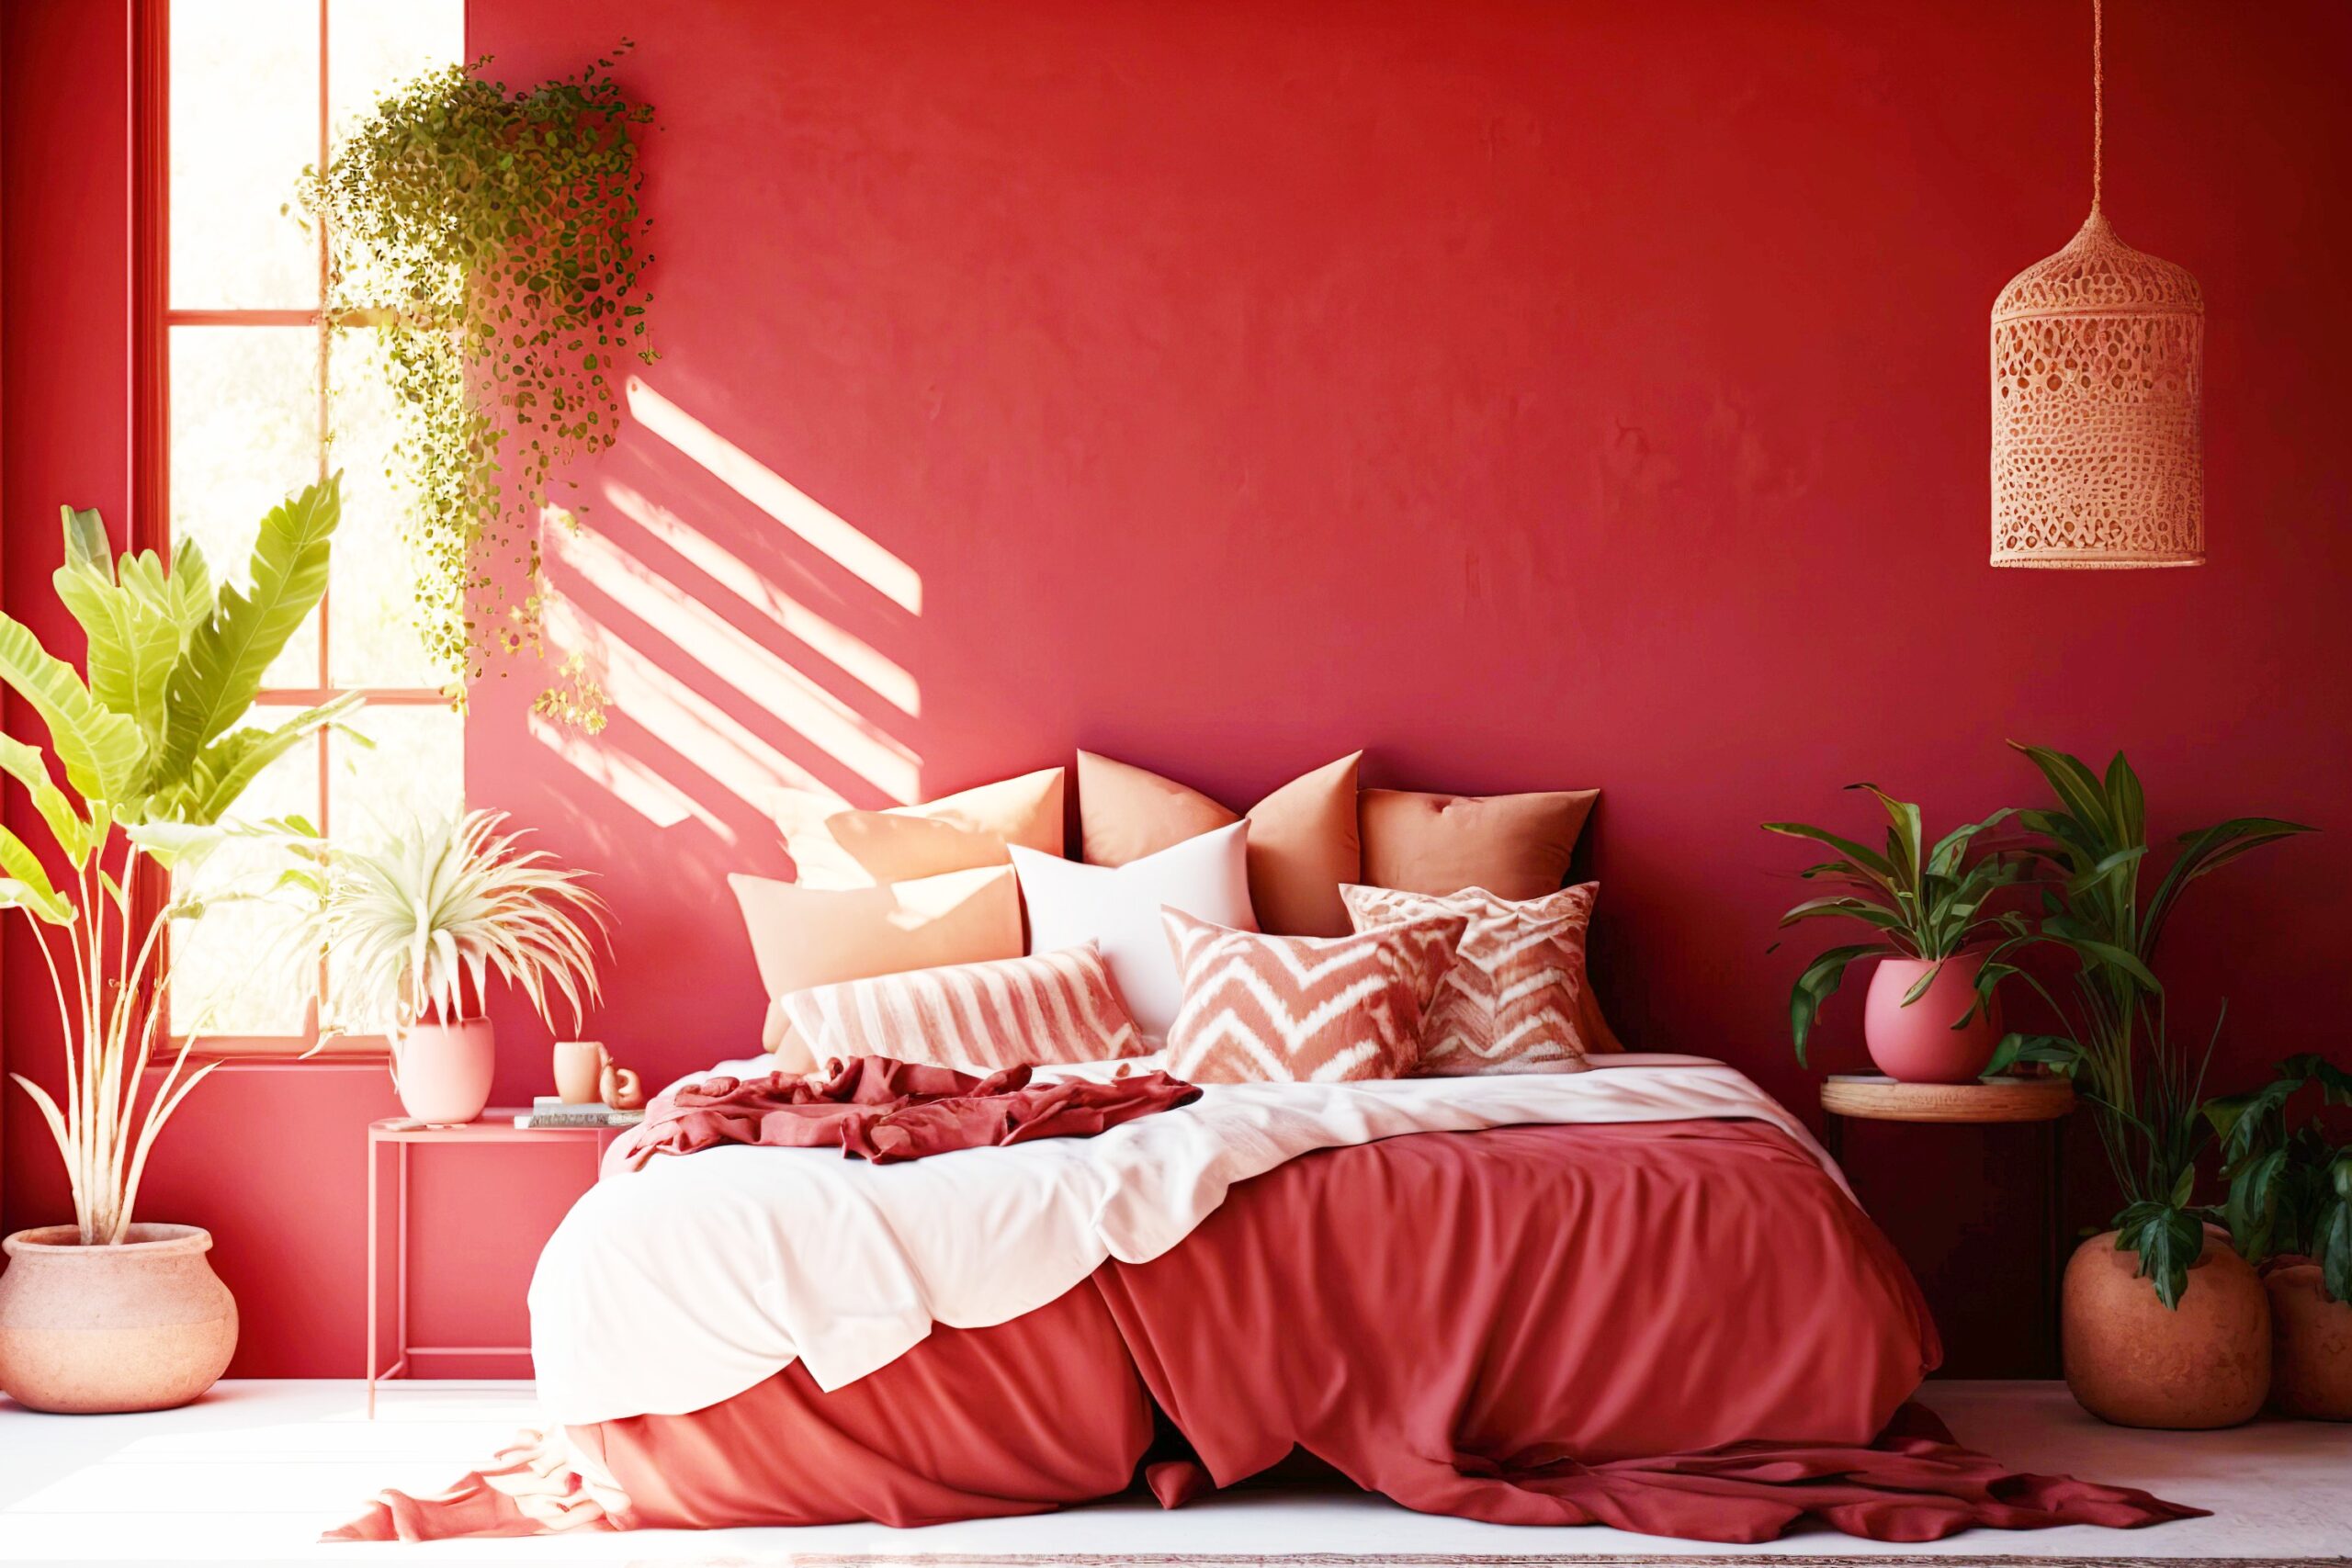 <img src="red.jpg" alt="red morrocan style bedroom"/>